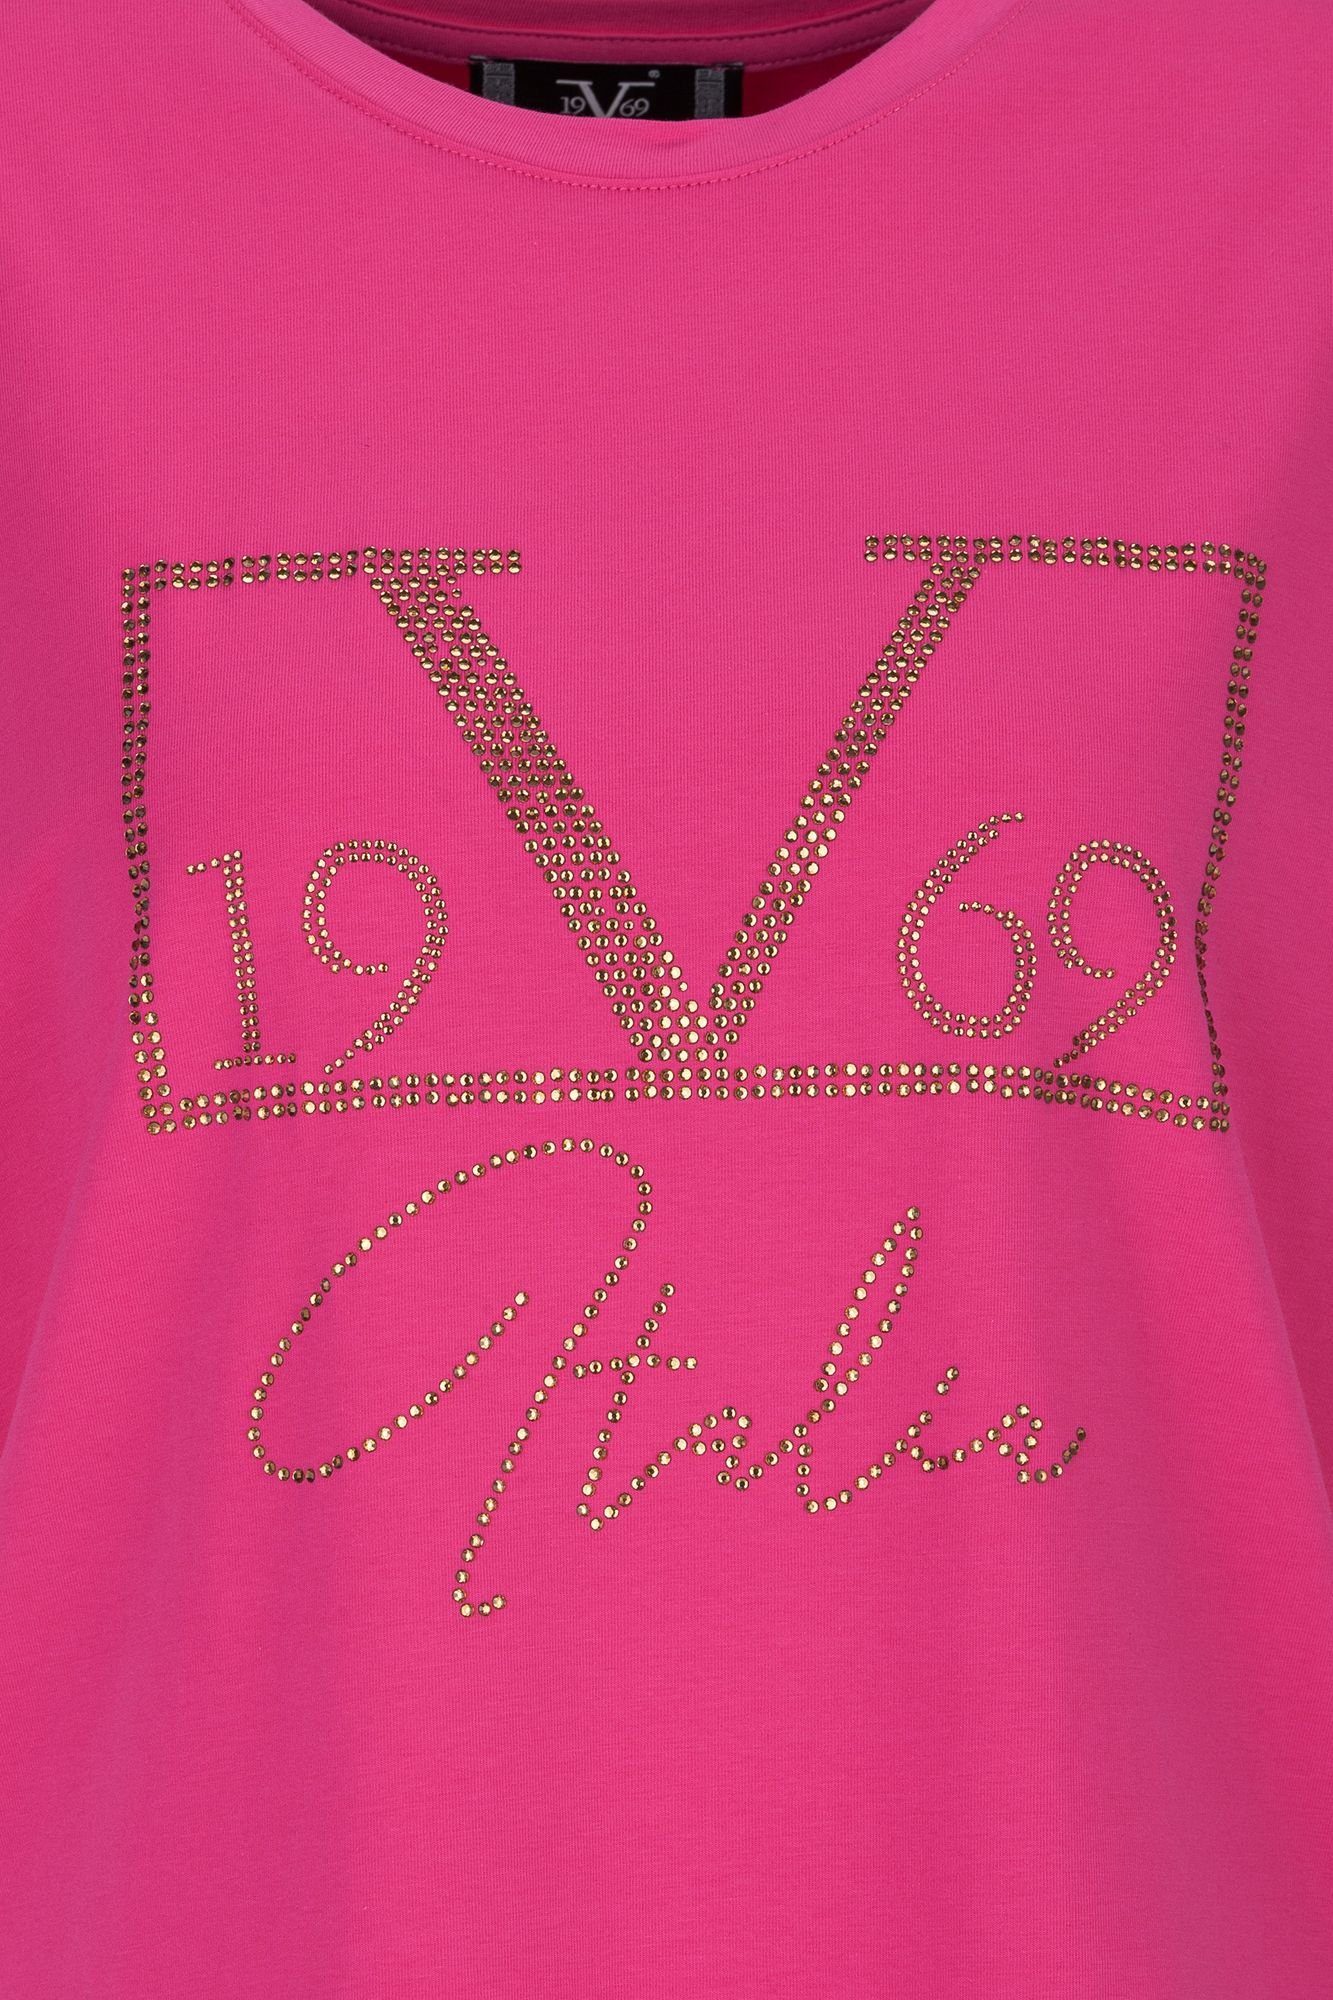 Italia T-Shirt by 19V69 Versace Calla PINK